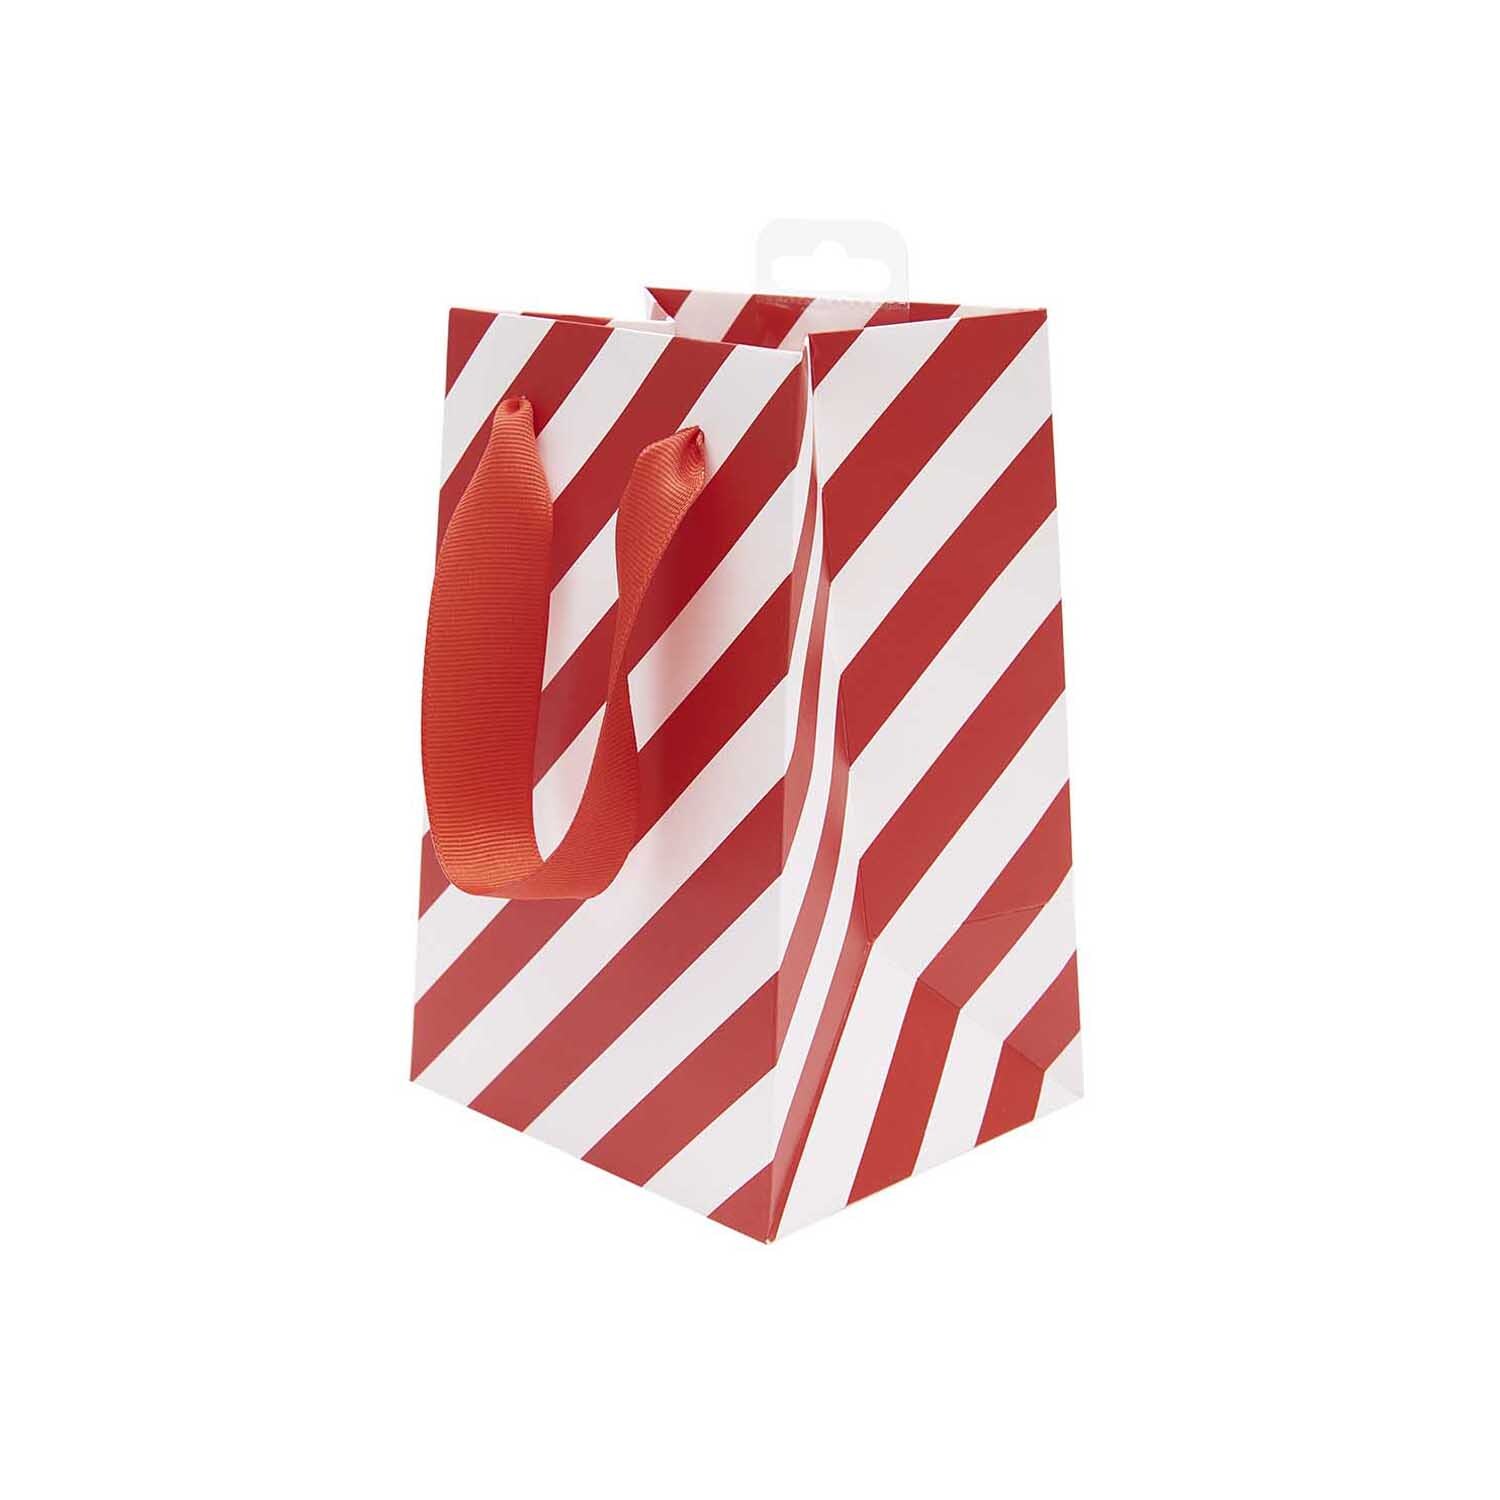 Paper Poetry Geschenktüte Streifen rot-weiß 12x18x10cm